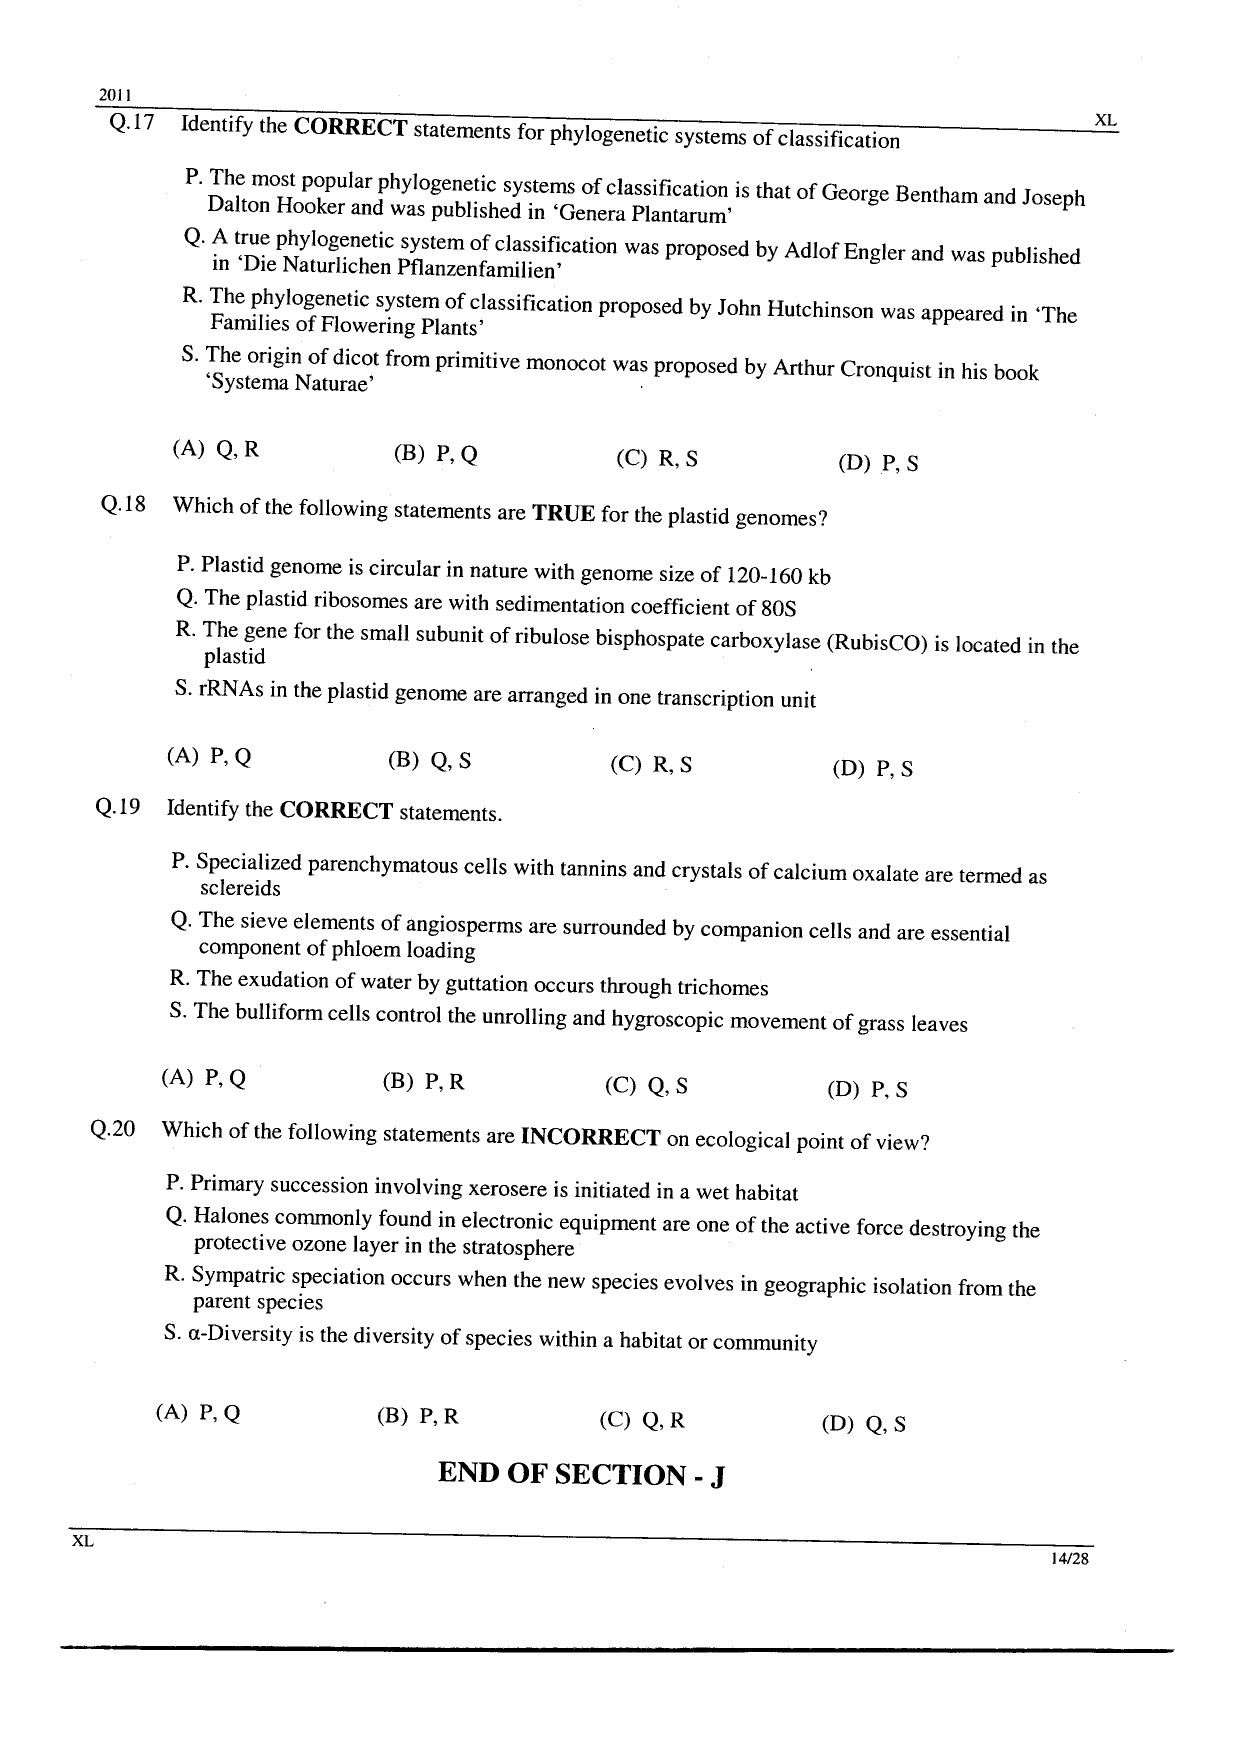 GATE Exam Question Paper 2011 Life Sciences 14